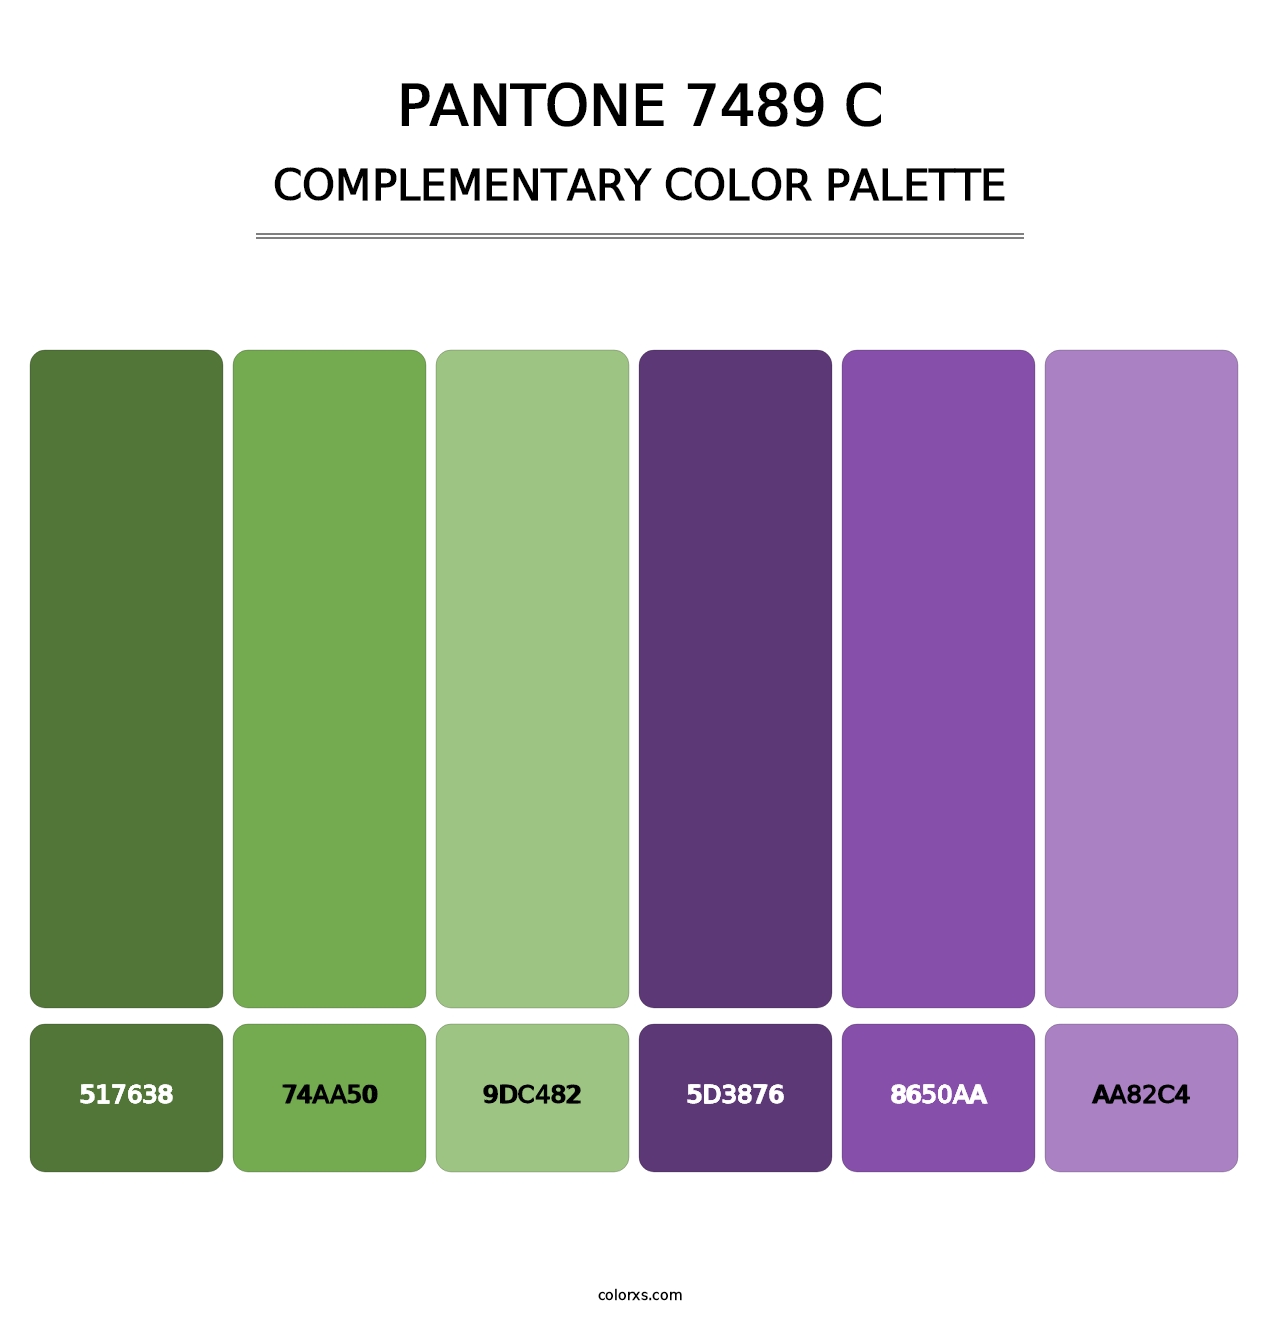 PANTONE 7489 C - Complementary Color Palette